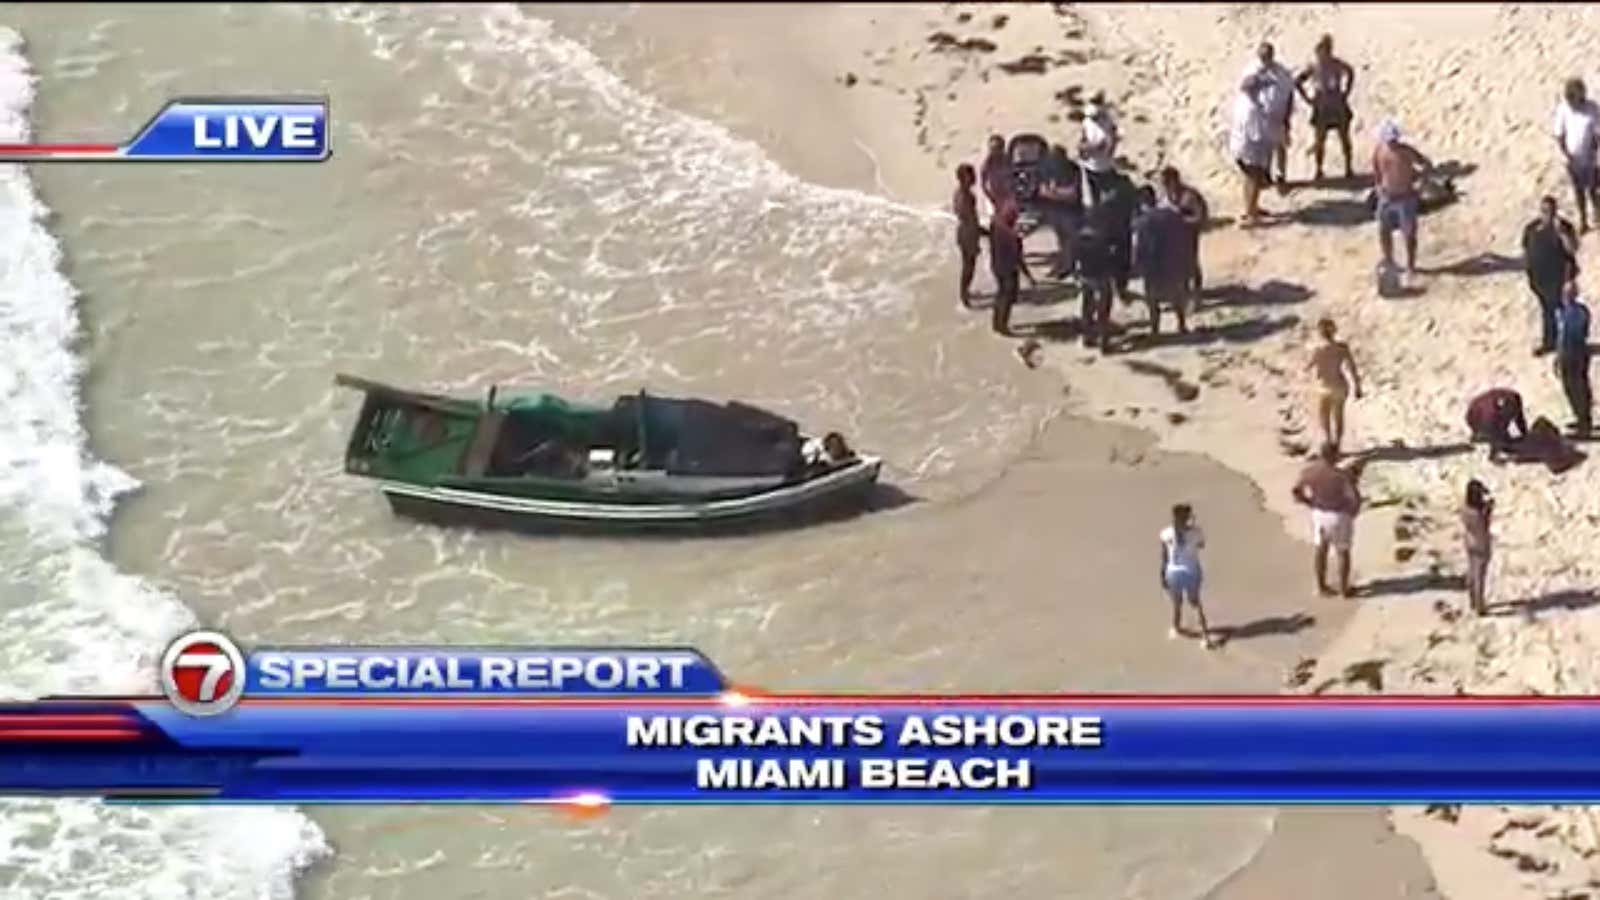 Migrants arrive at Miami Beach.